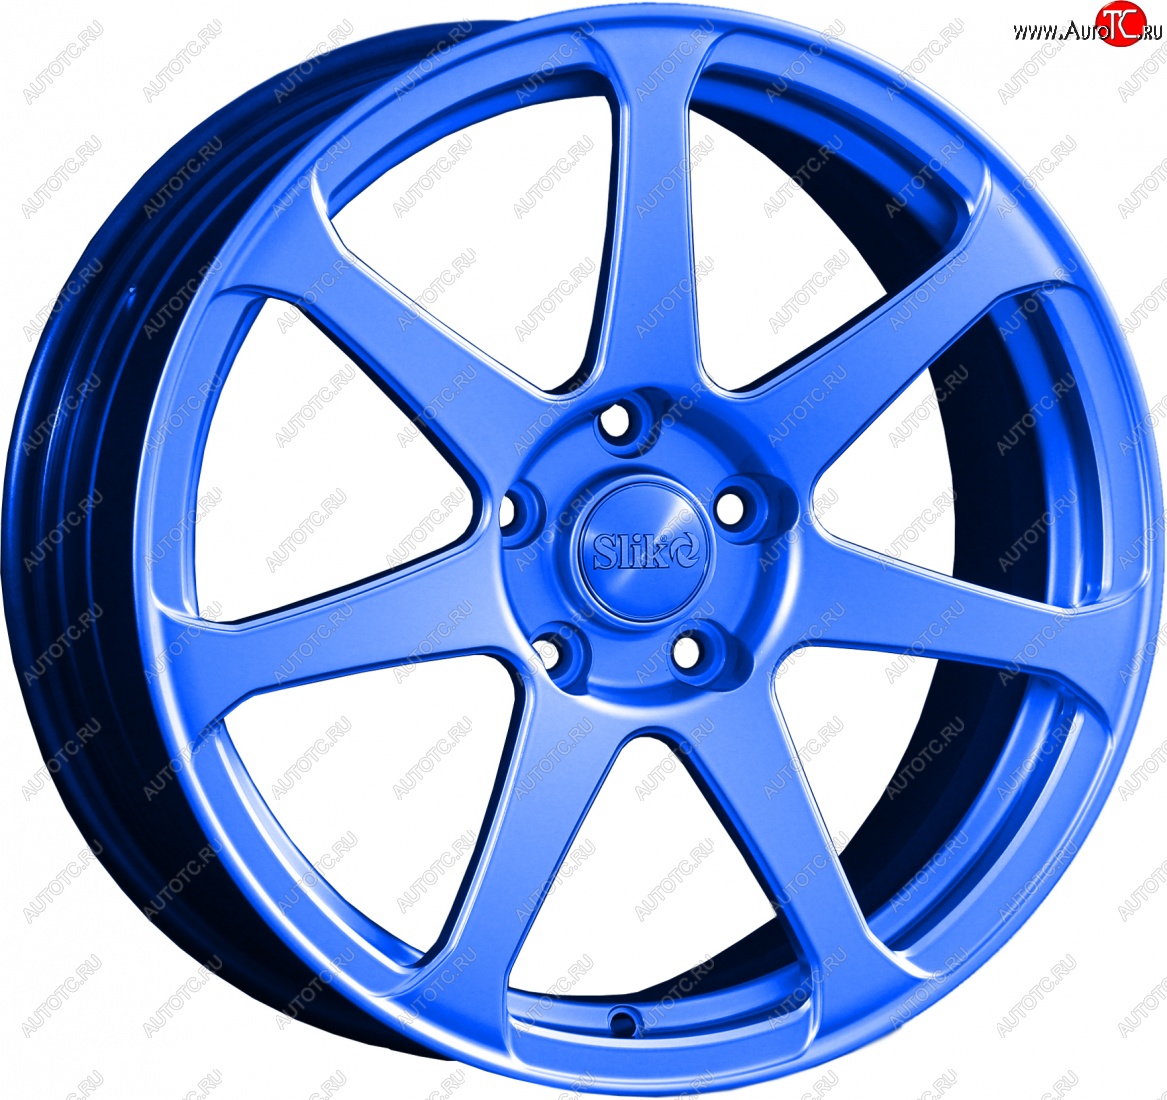 14 499 р. Кованый диск Slik classik R17x7.5 Синий (BLUE) 7.5x17 Toyota Allex E12# 2-ой рестайлинг (2004-2006) 4x100.0xDIA54.1xET39.0 (Цвет: BLUE)